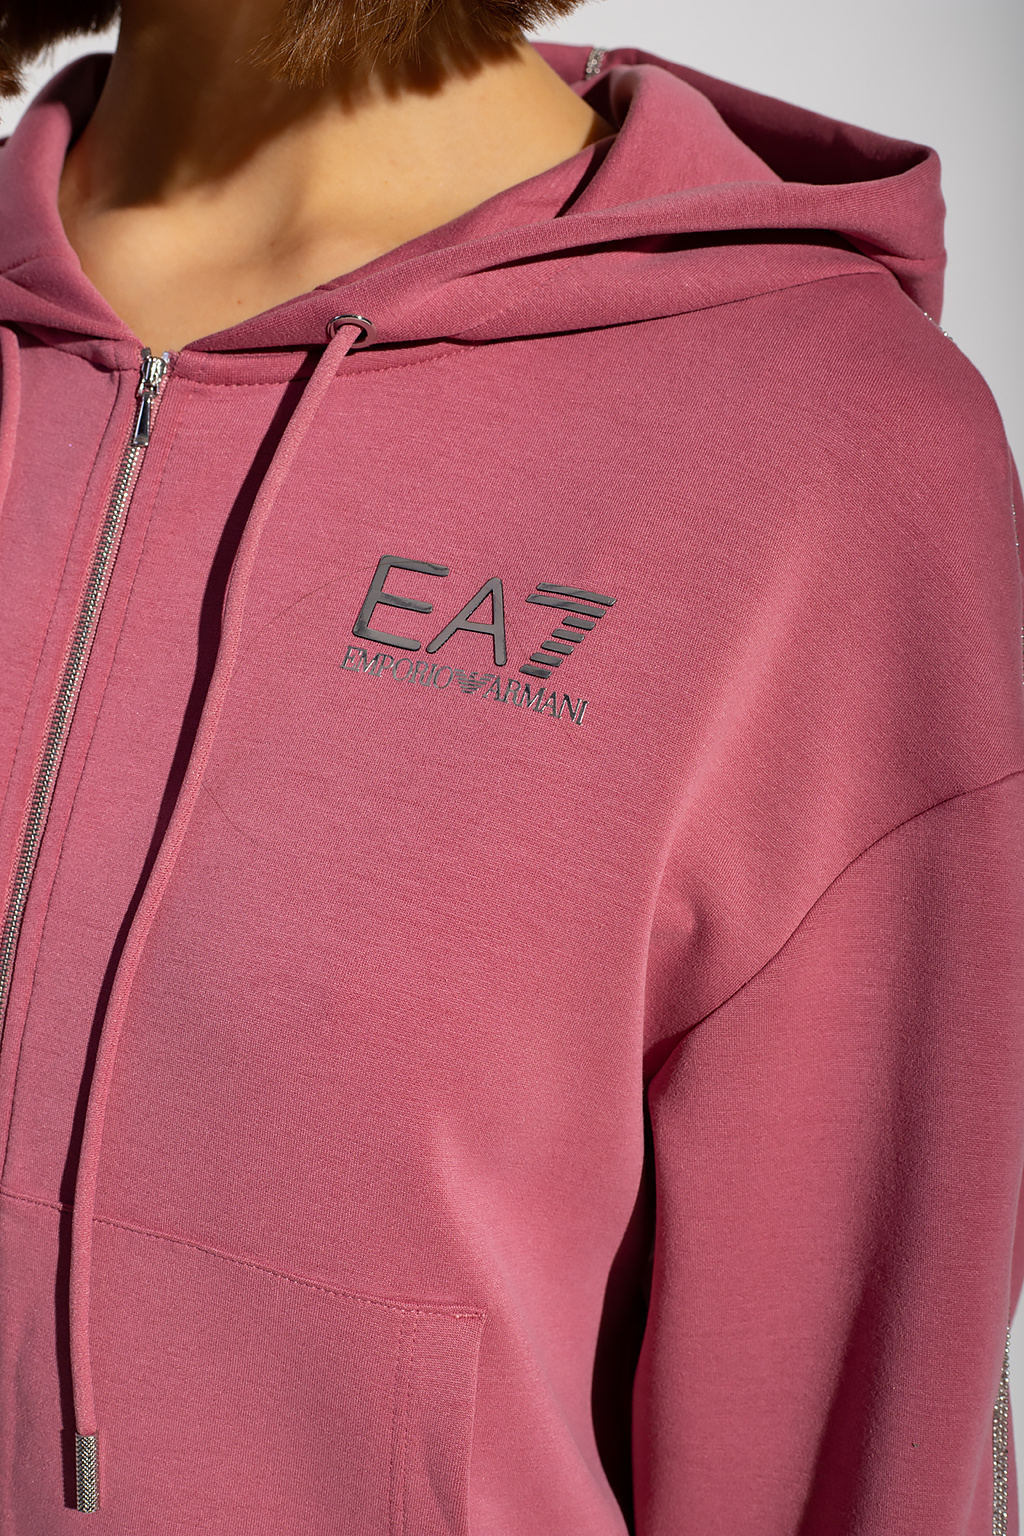 SchaferandweinerShops HK - Hoodie with logo EA7 Emporio armani 